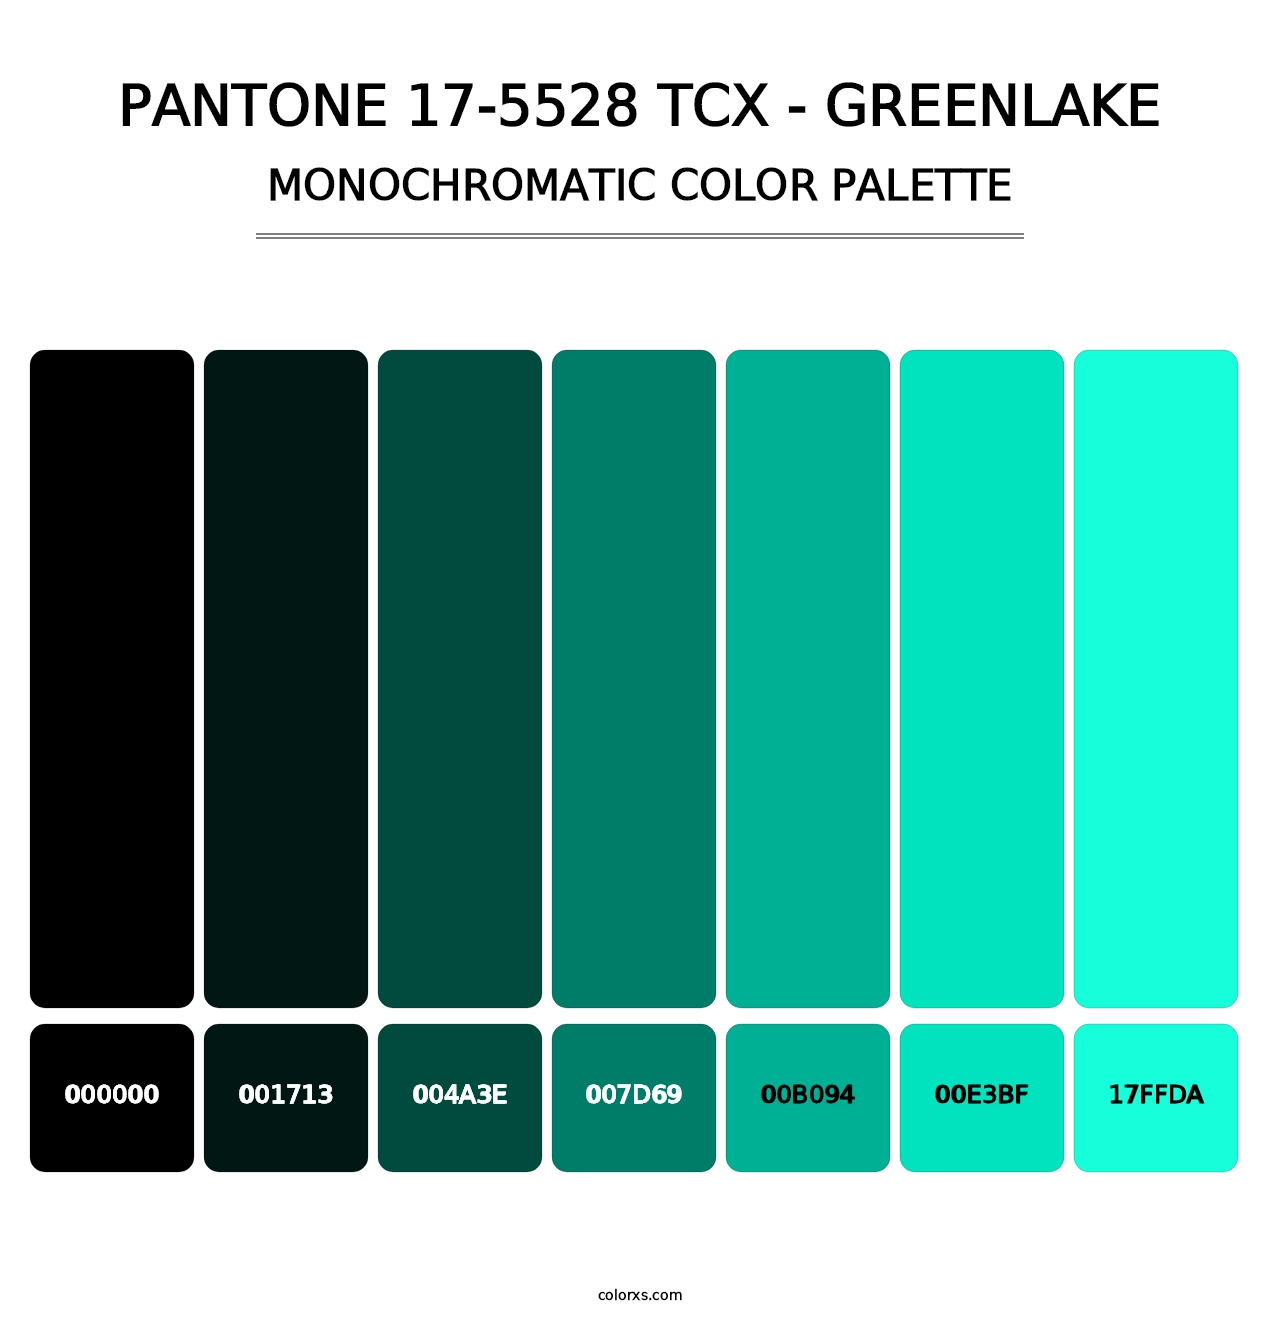 PANTONE 17-5528 TCX - Greenlake - Monochromatic Color Palette